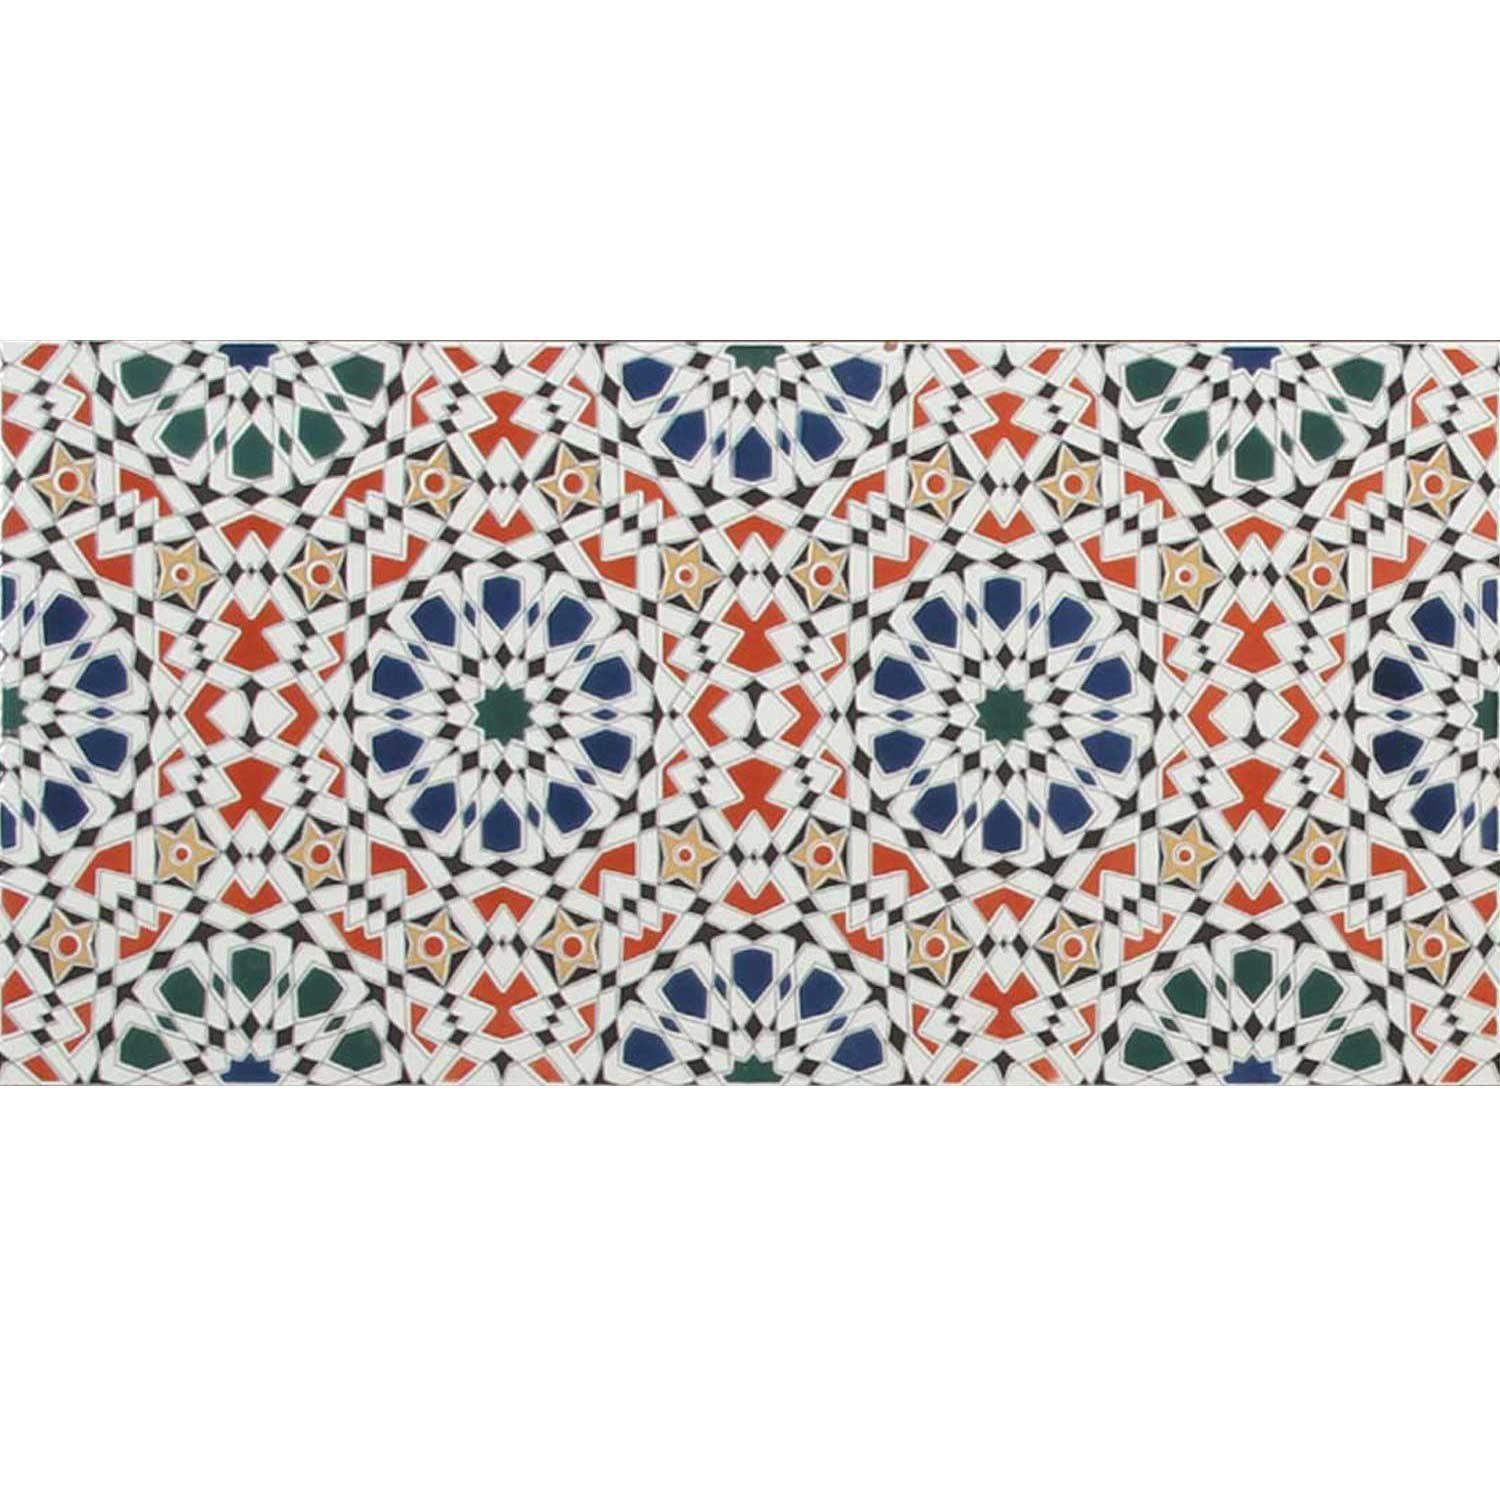 Wandfliese mit cm Mosaik-Muster, Endlos 1 Casa Moro 50x25 Fliesen Muster Liman qm bunt Marokkanische